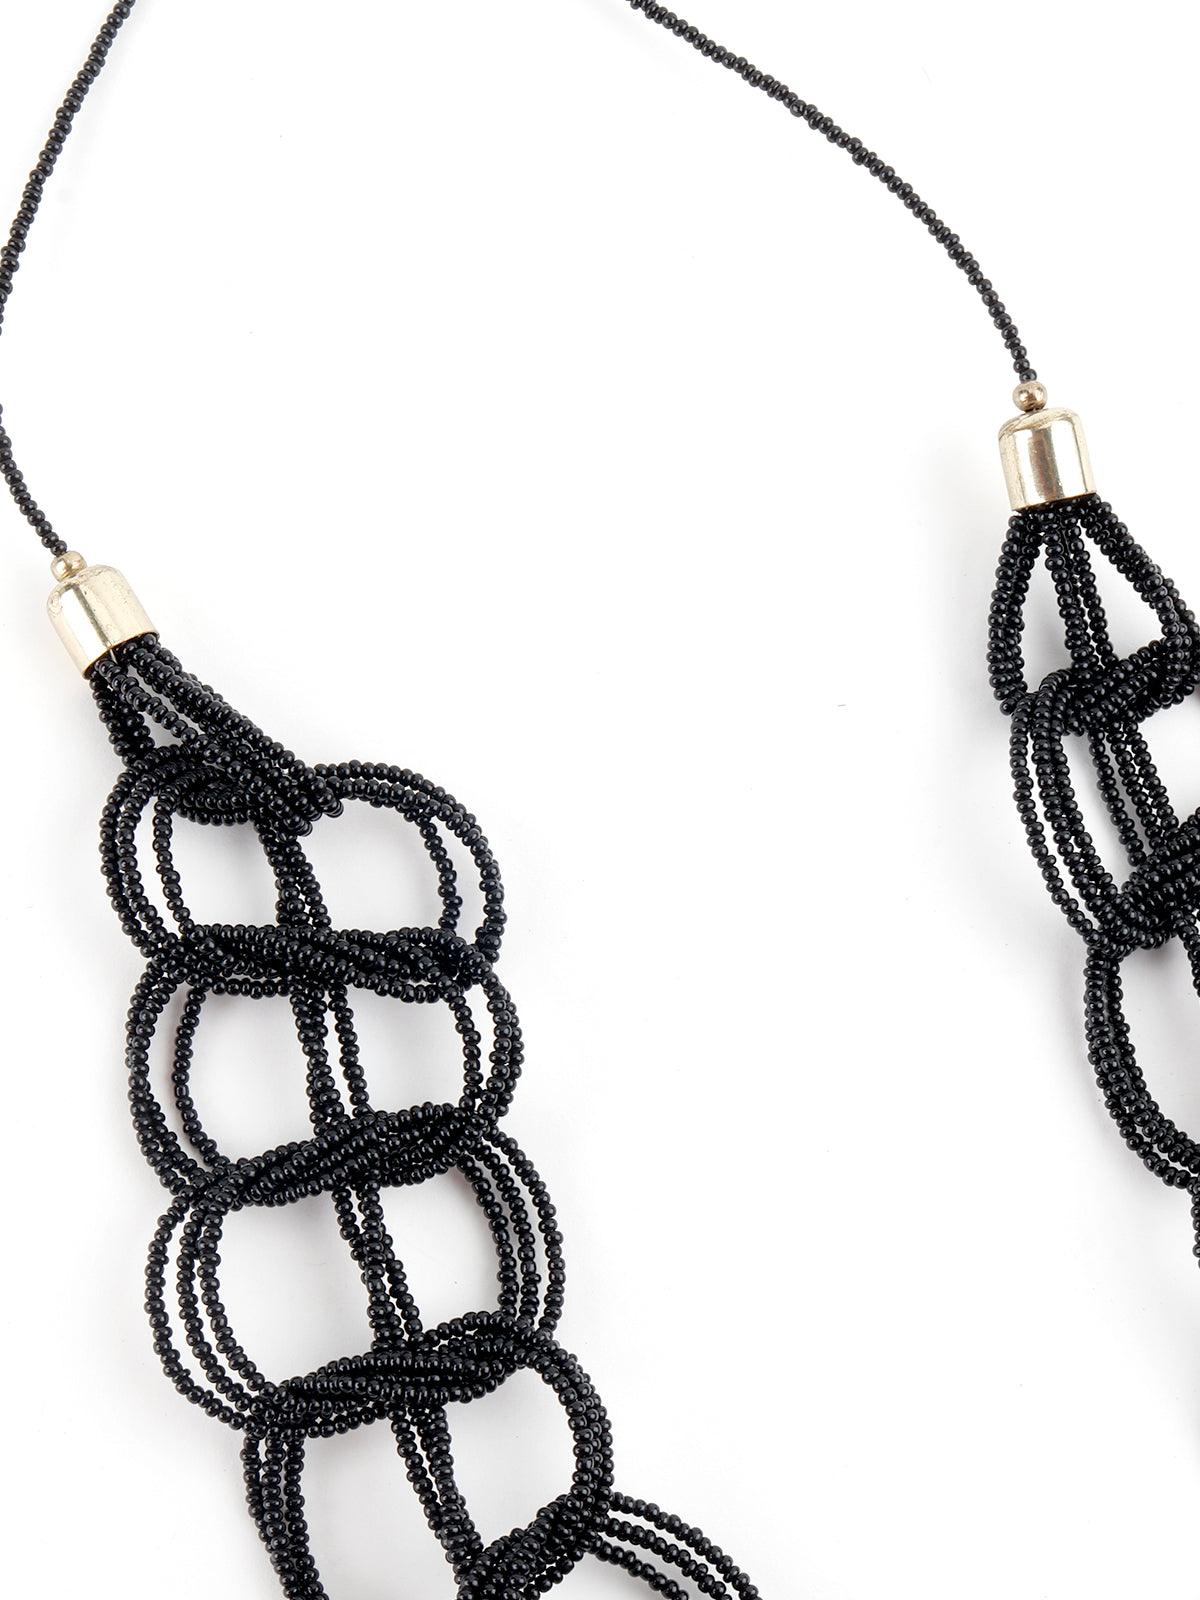 Black Beads Entangled Chain - Odette